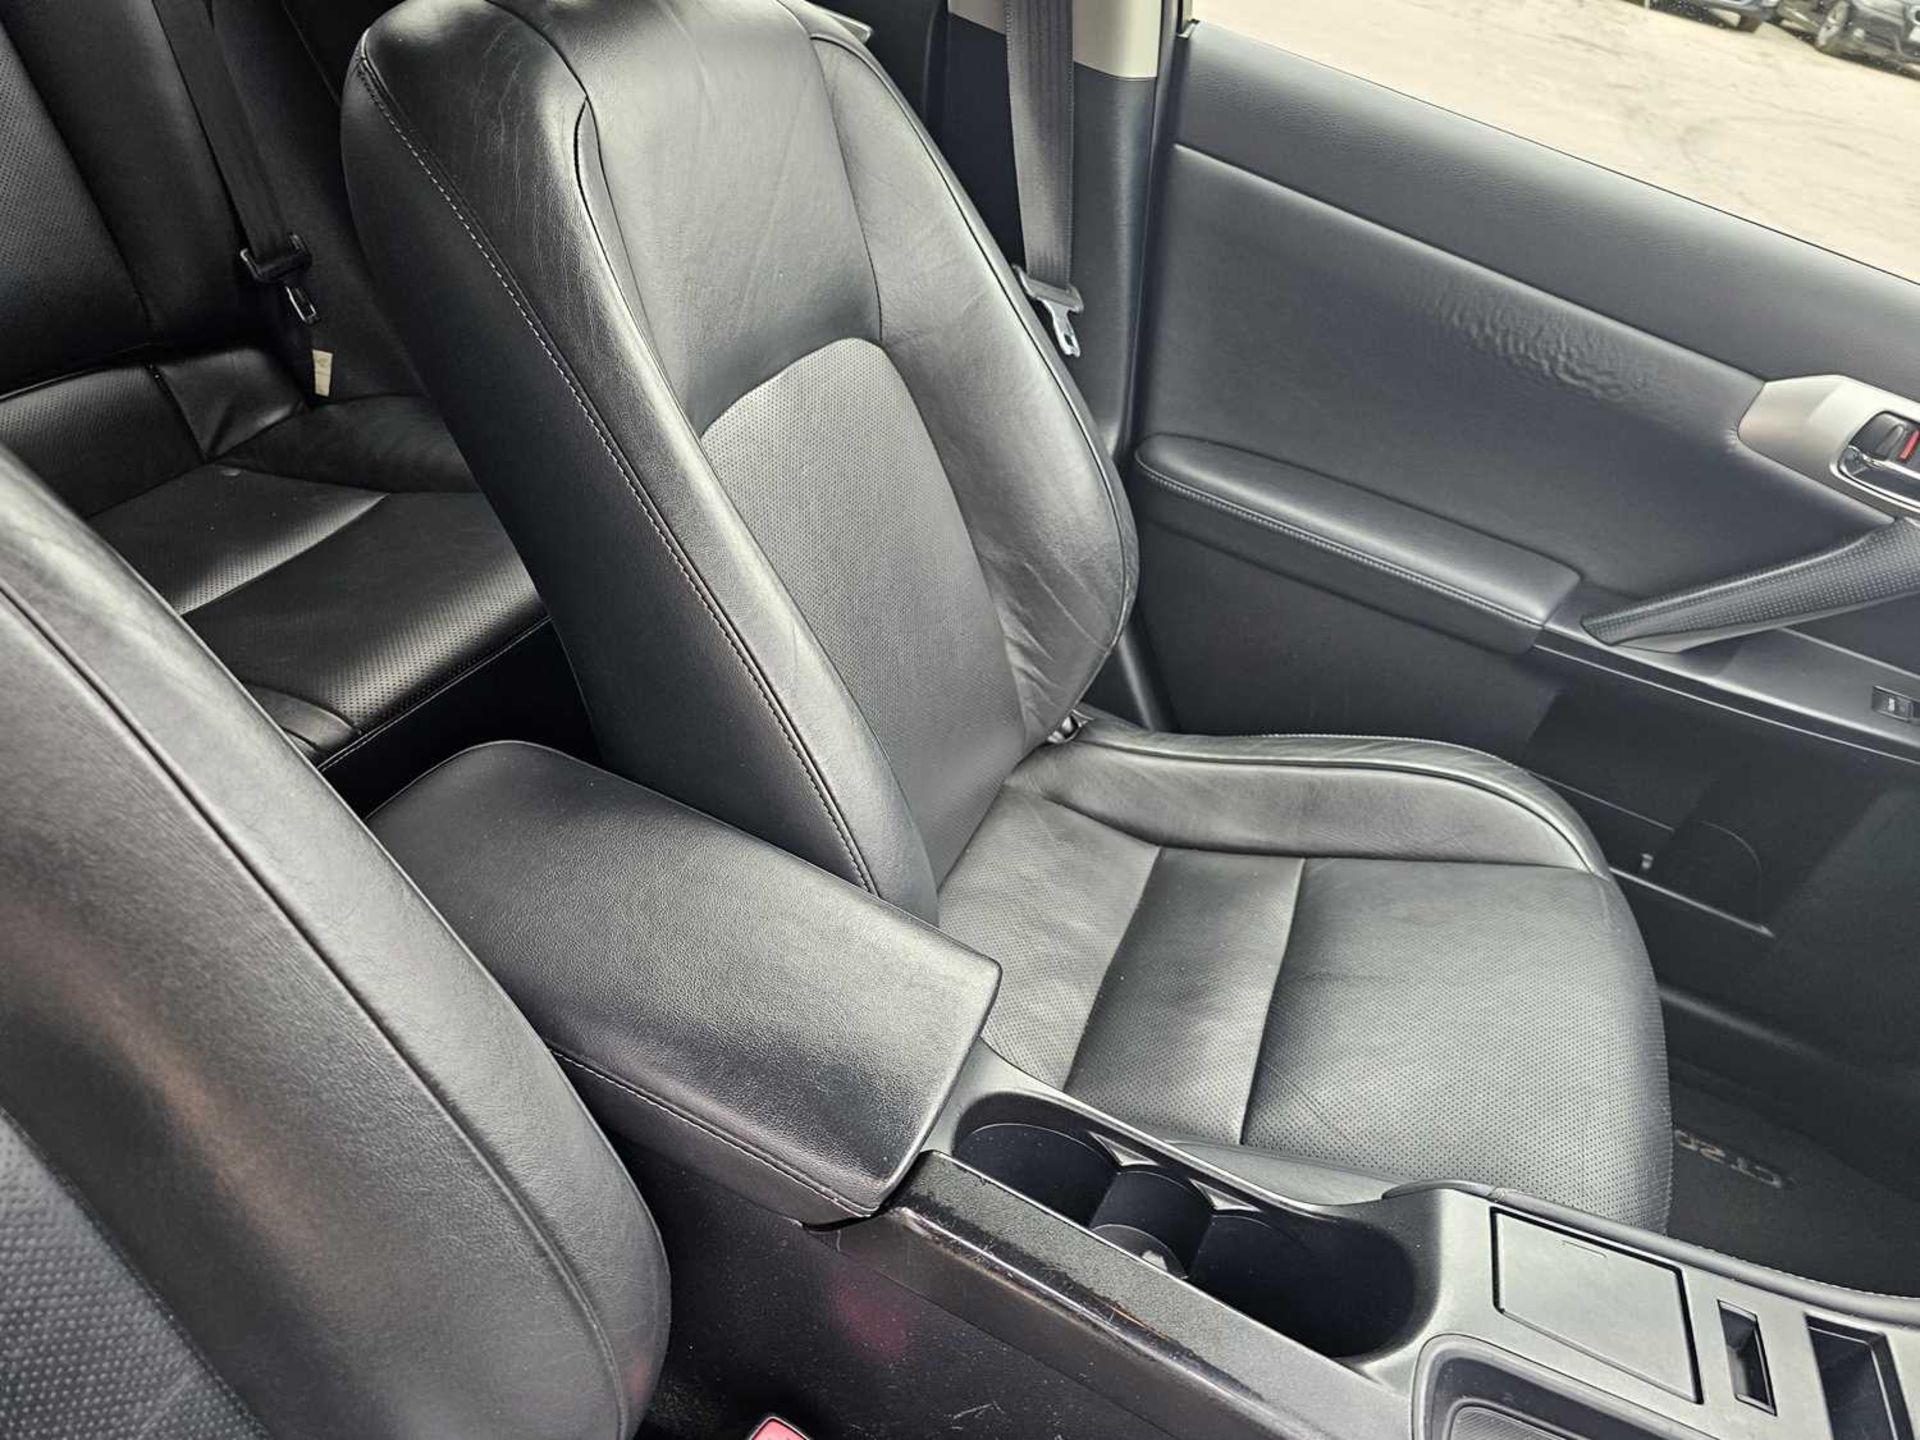 2011 Lexus CT200H Se-L Cvt Hybrid, Auto, Full Leather, Heated Seats, Bluetooth (NO VAT)(Reg. Docs. A - Image 21 of 26